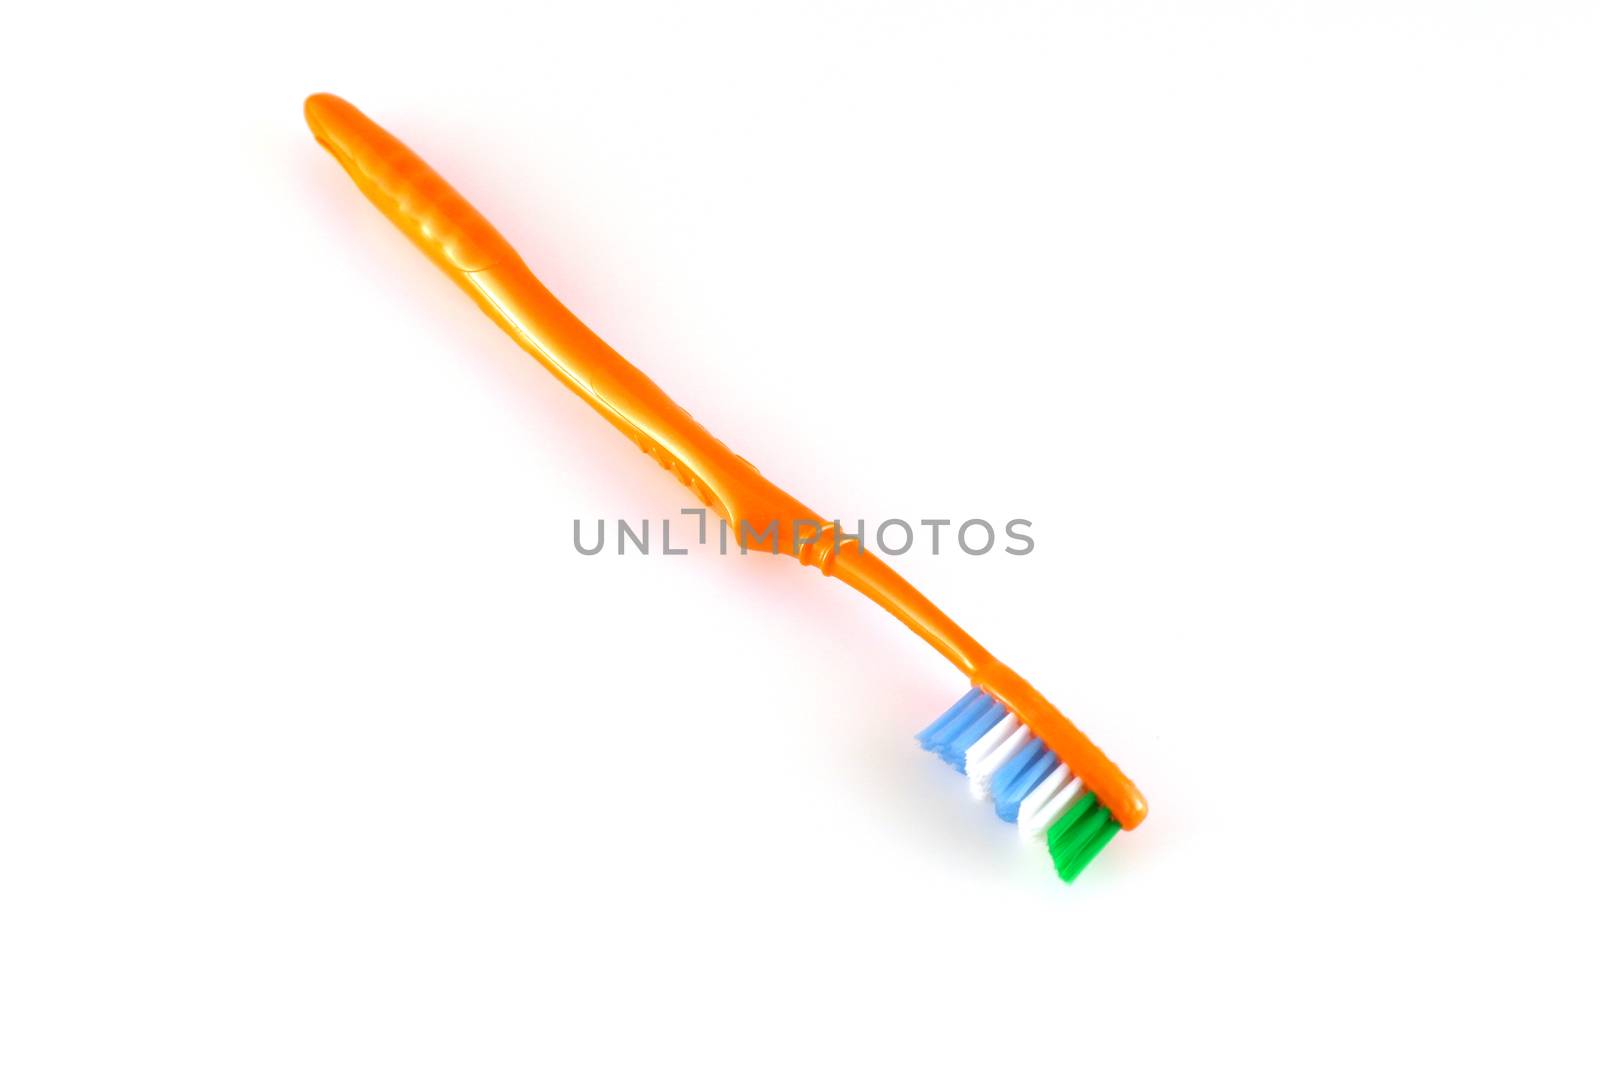 Orange toothbrush over white by sergpet